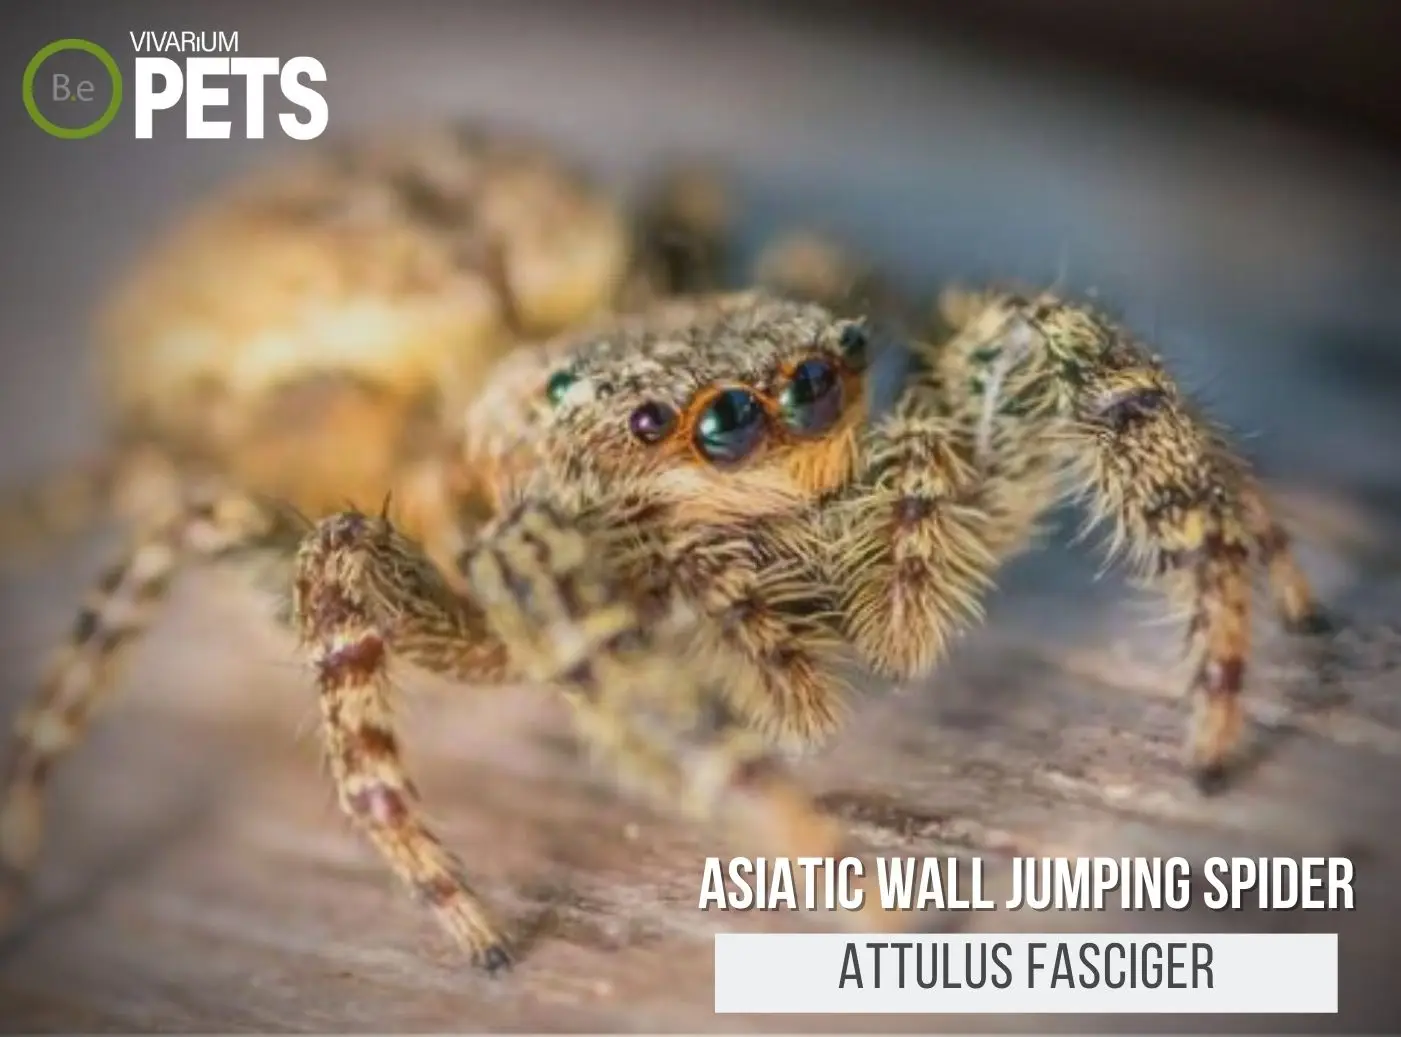 Attulus fasciger: An Asiatic Wall Jumping Spider Care Guide!